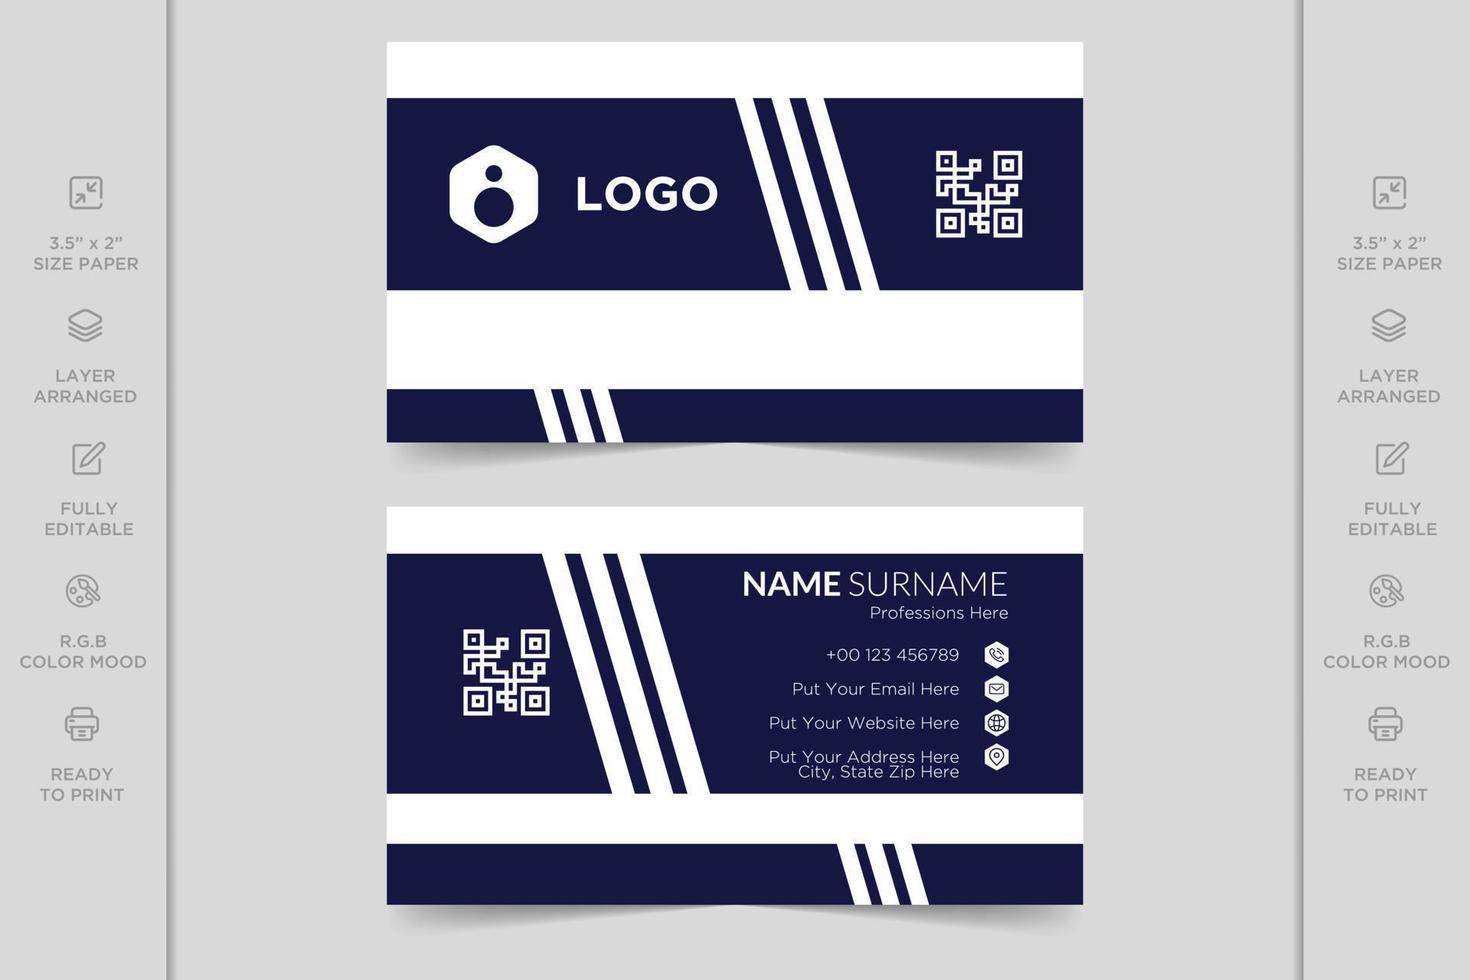 Colorful creative modern horizontal professional minimal company business card design vector